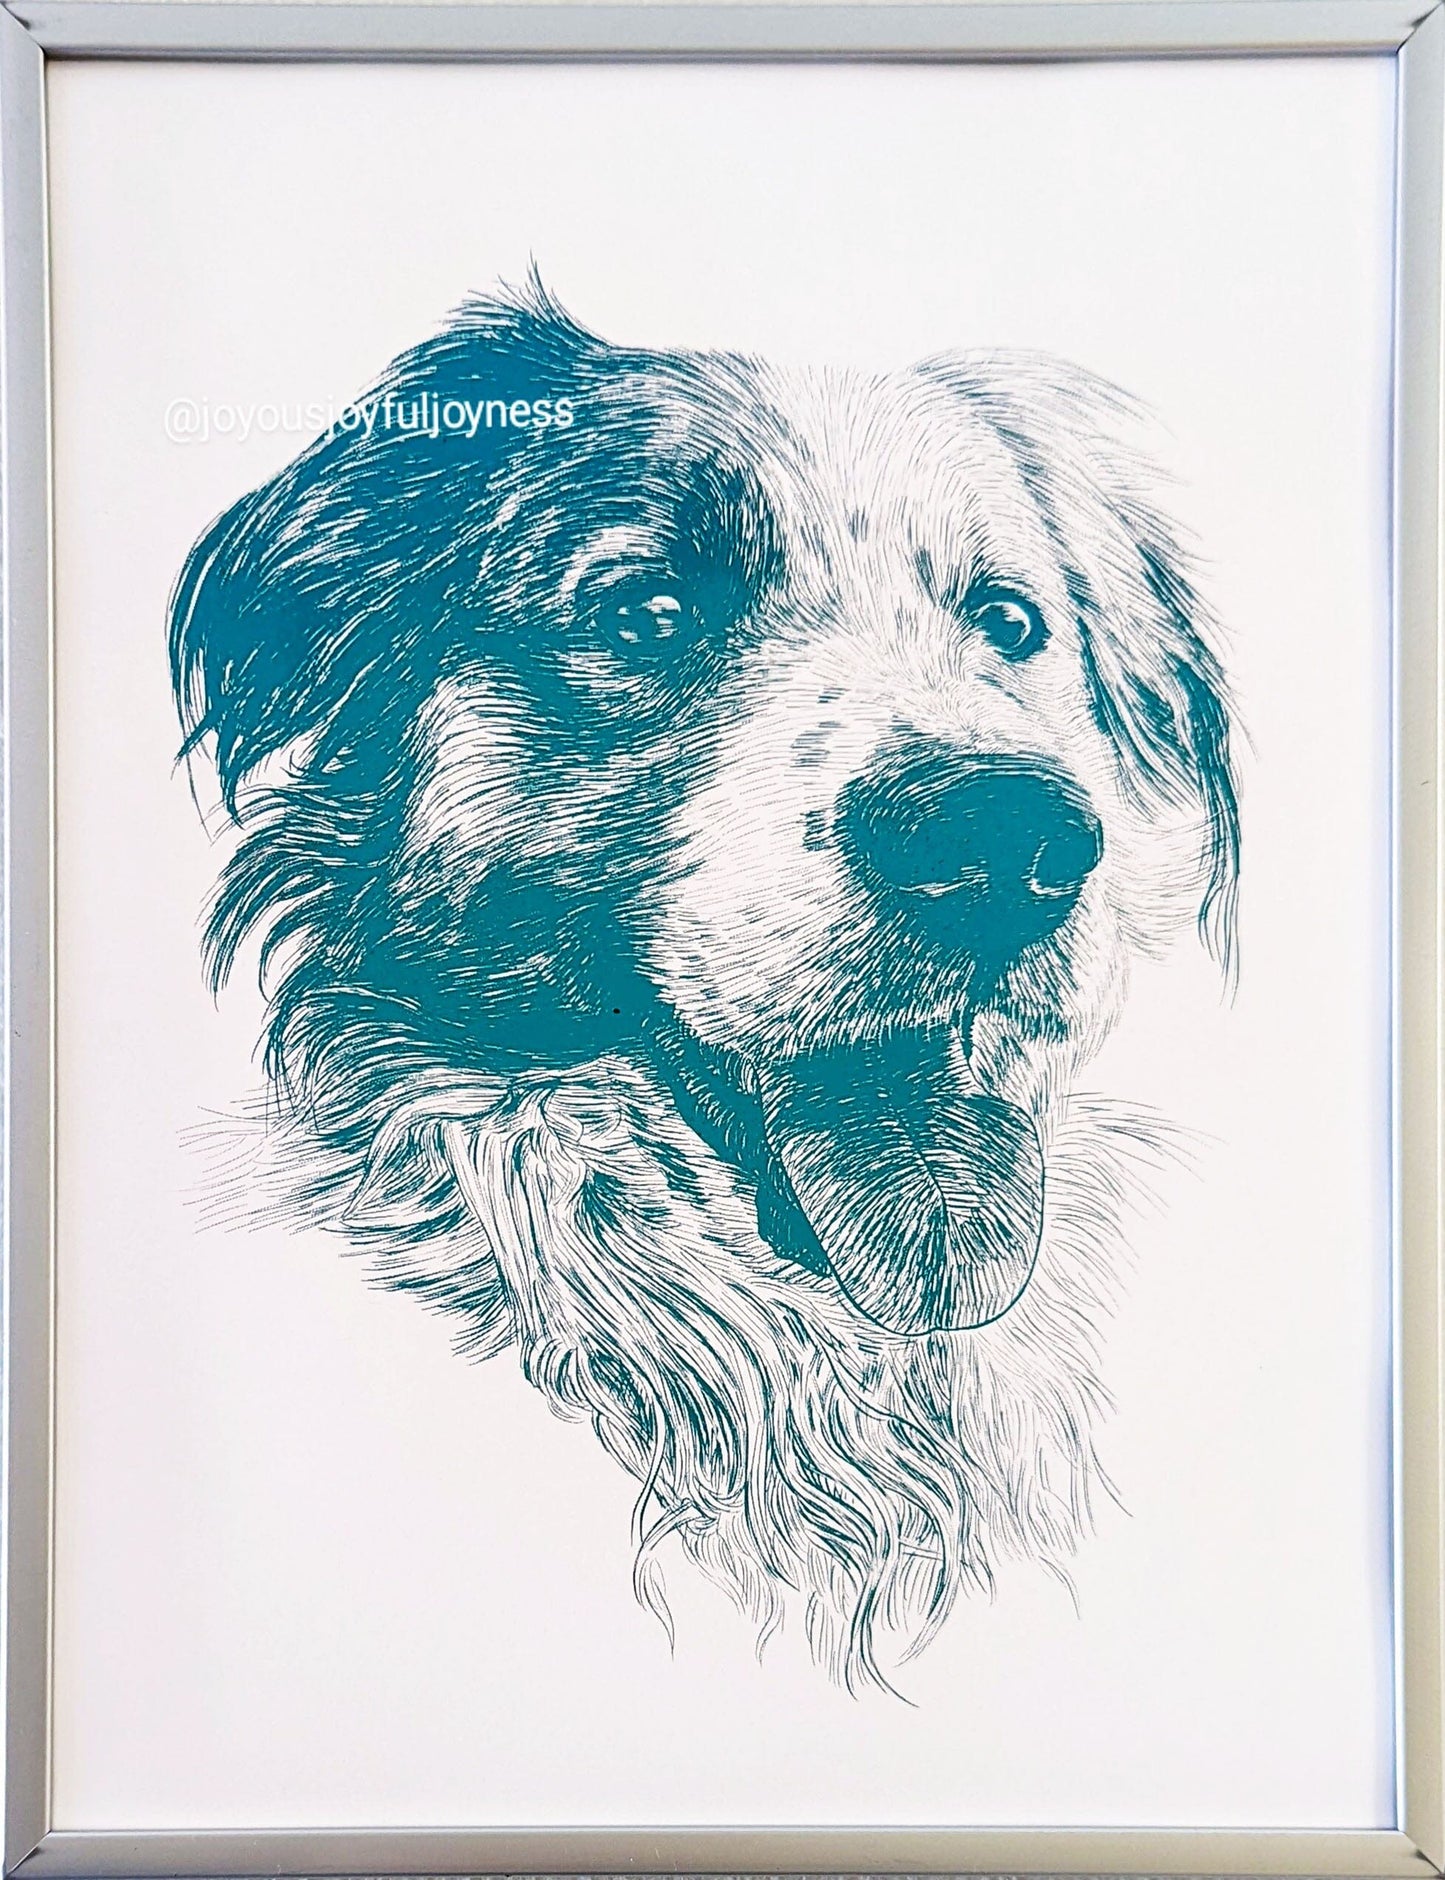 Handmade Puppy Portraits Posters, Prints, & Visual Artwork JoyousJoyfulJoyness 